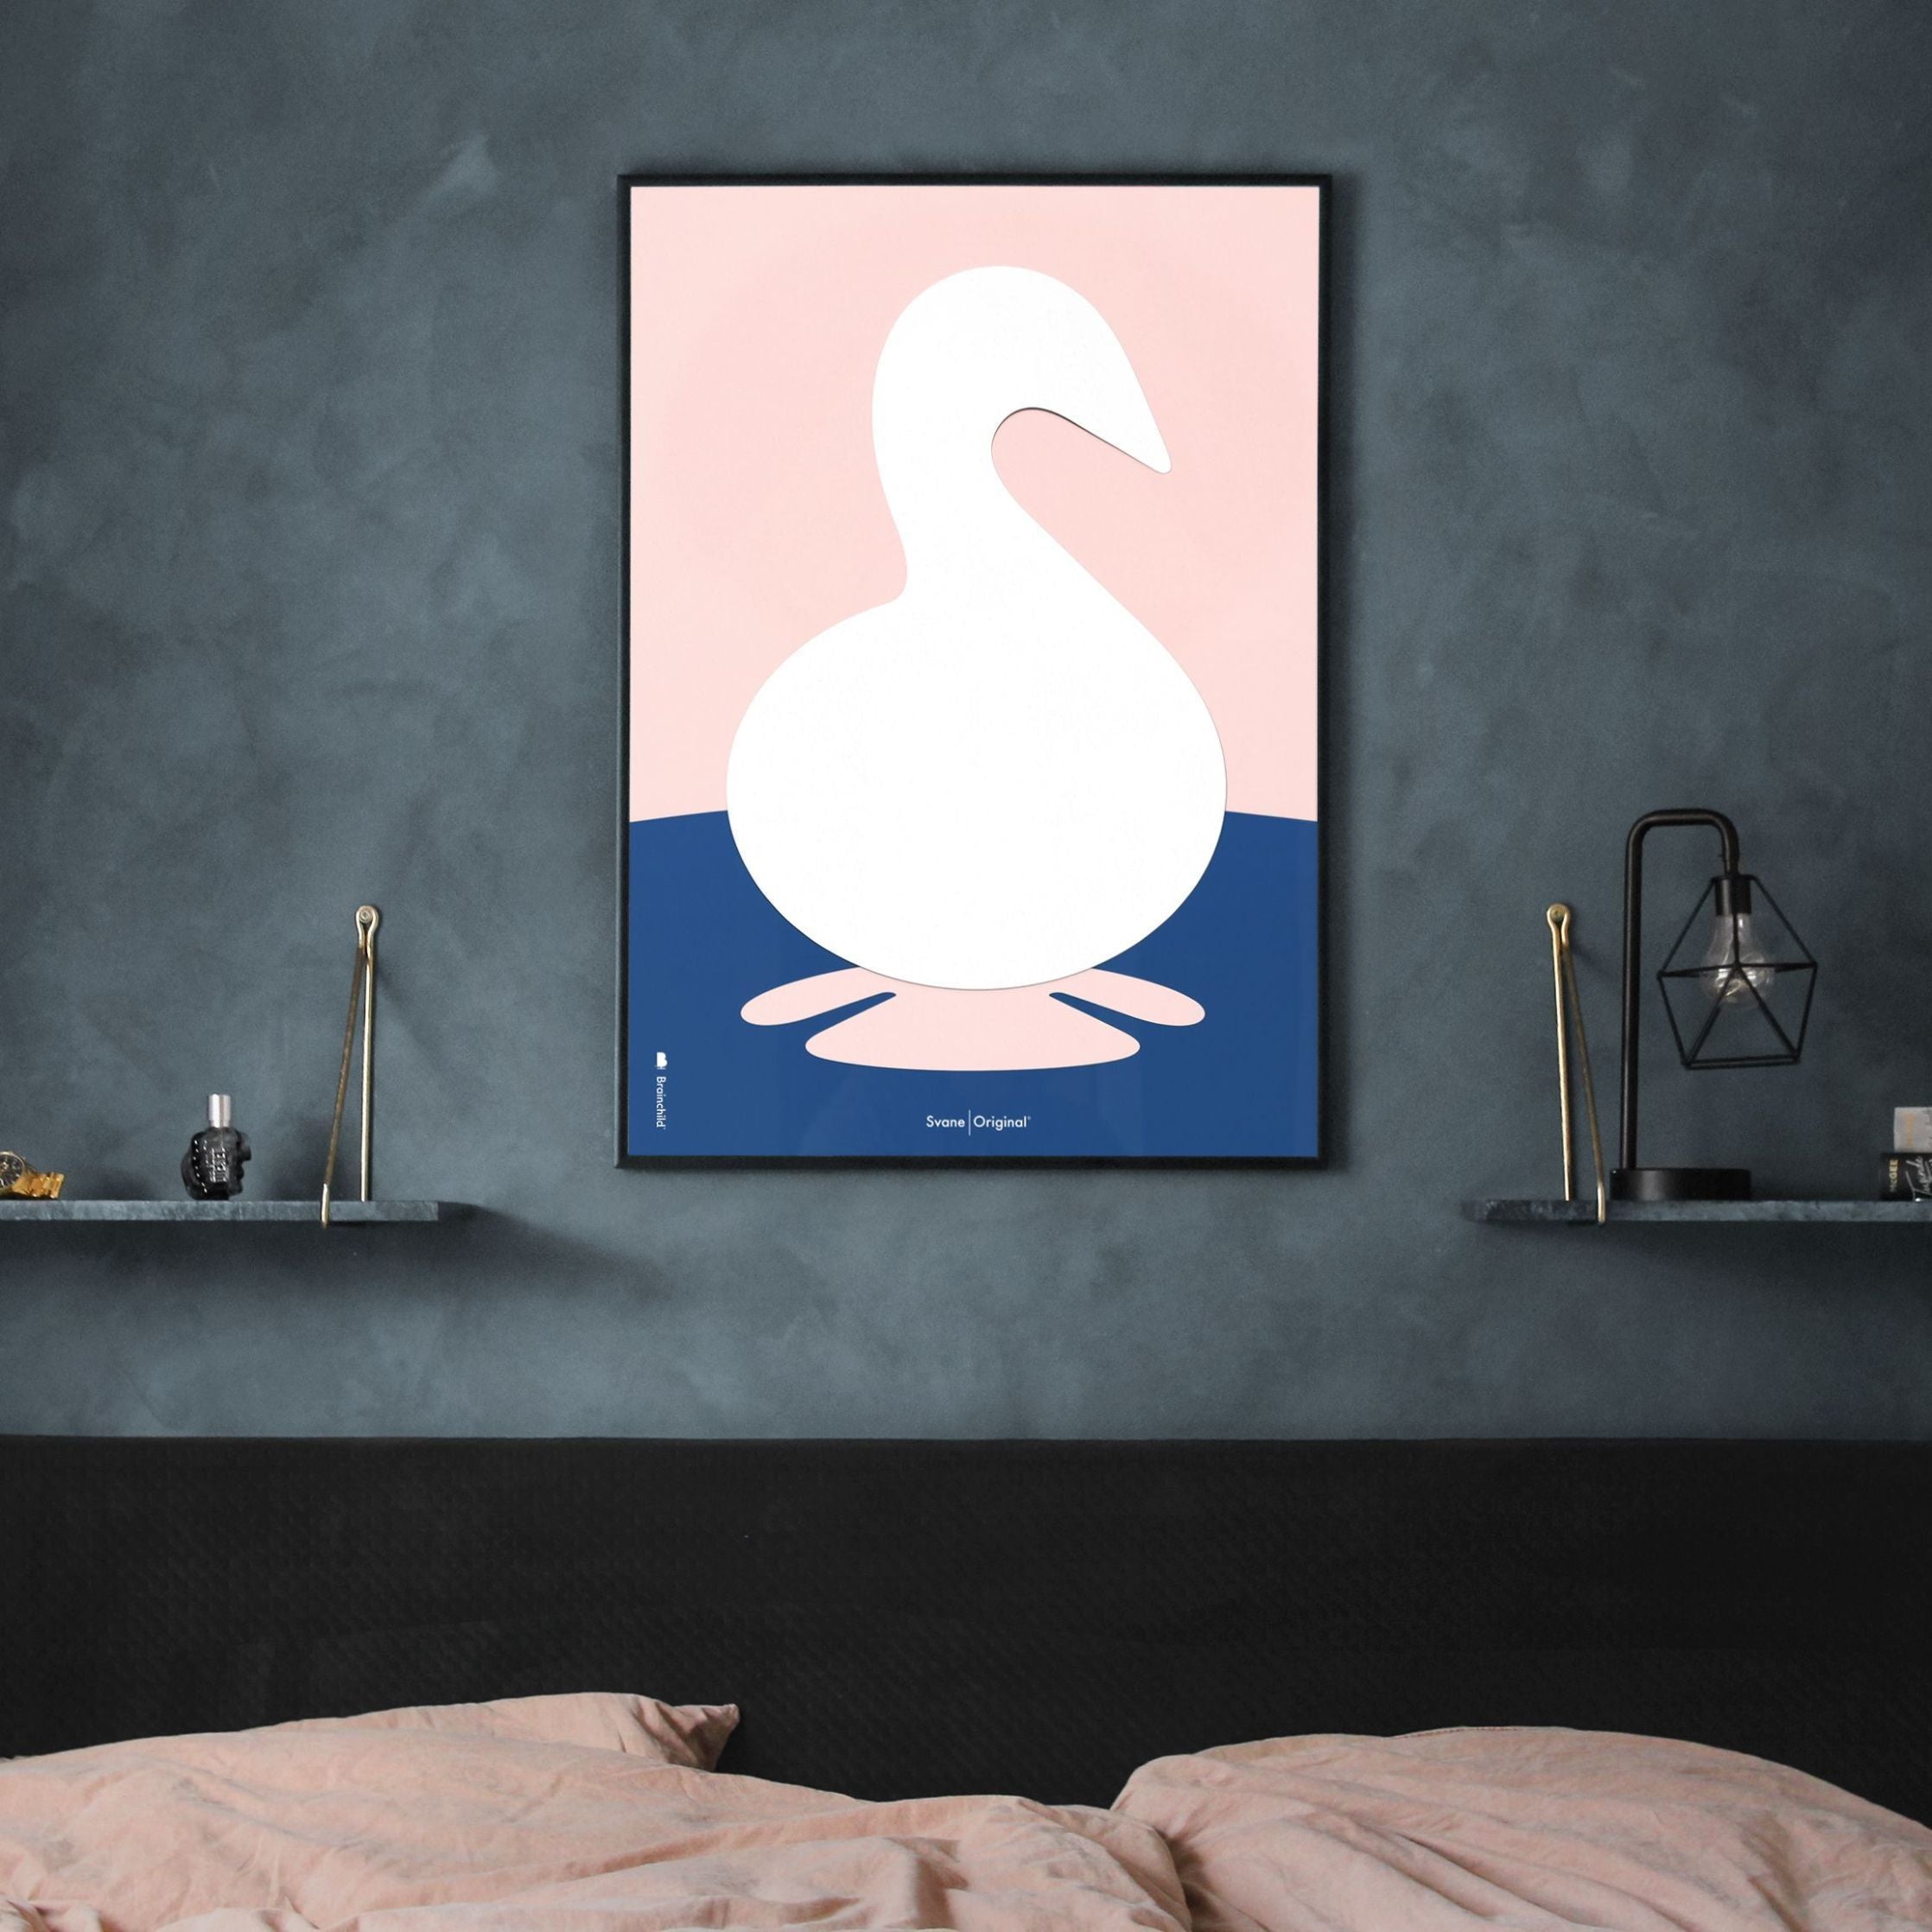 Plakát s labuťovou sponou s labuťovou sponou, rám vyrobený z tmavého dřeva 50x70 cm, růžové pozadí